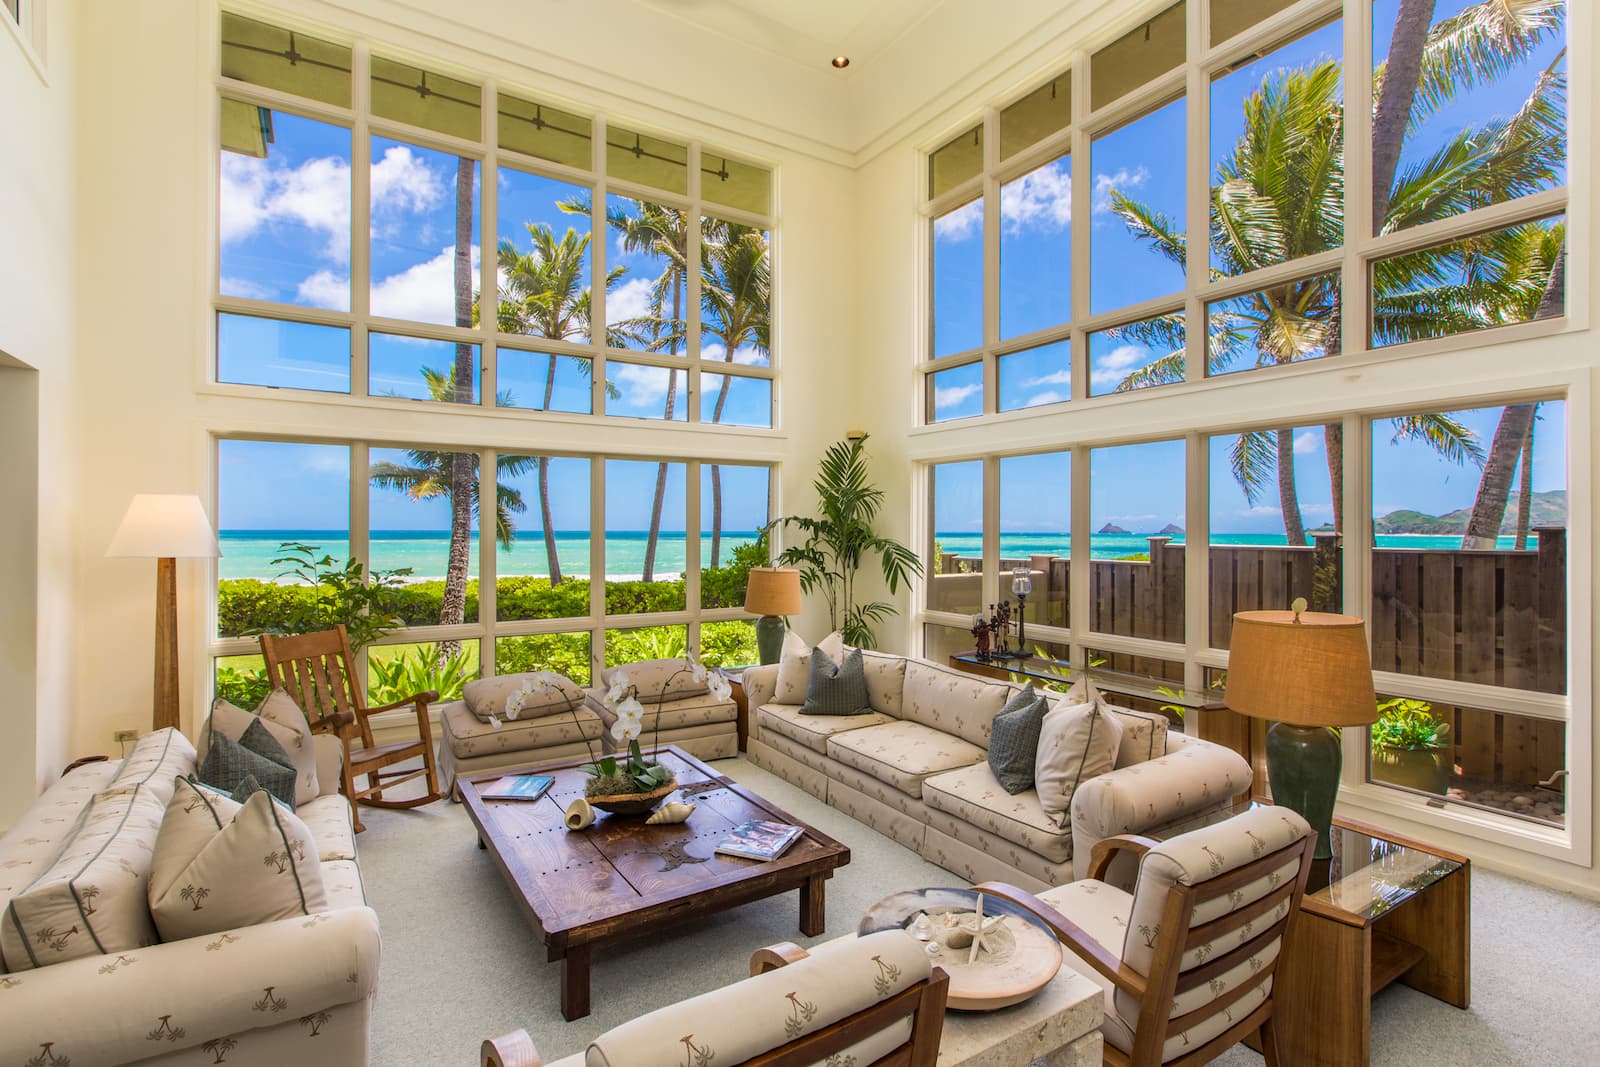 Living room of an Oahu luxury home